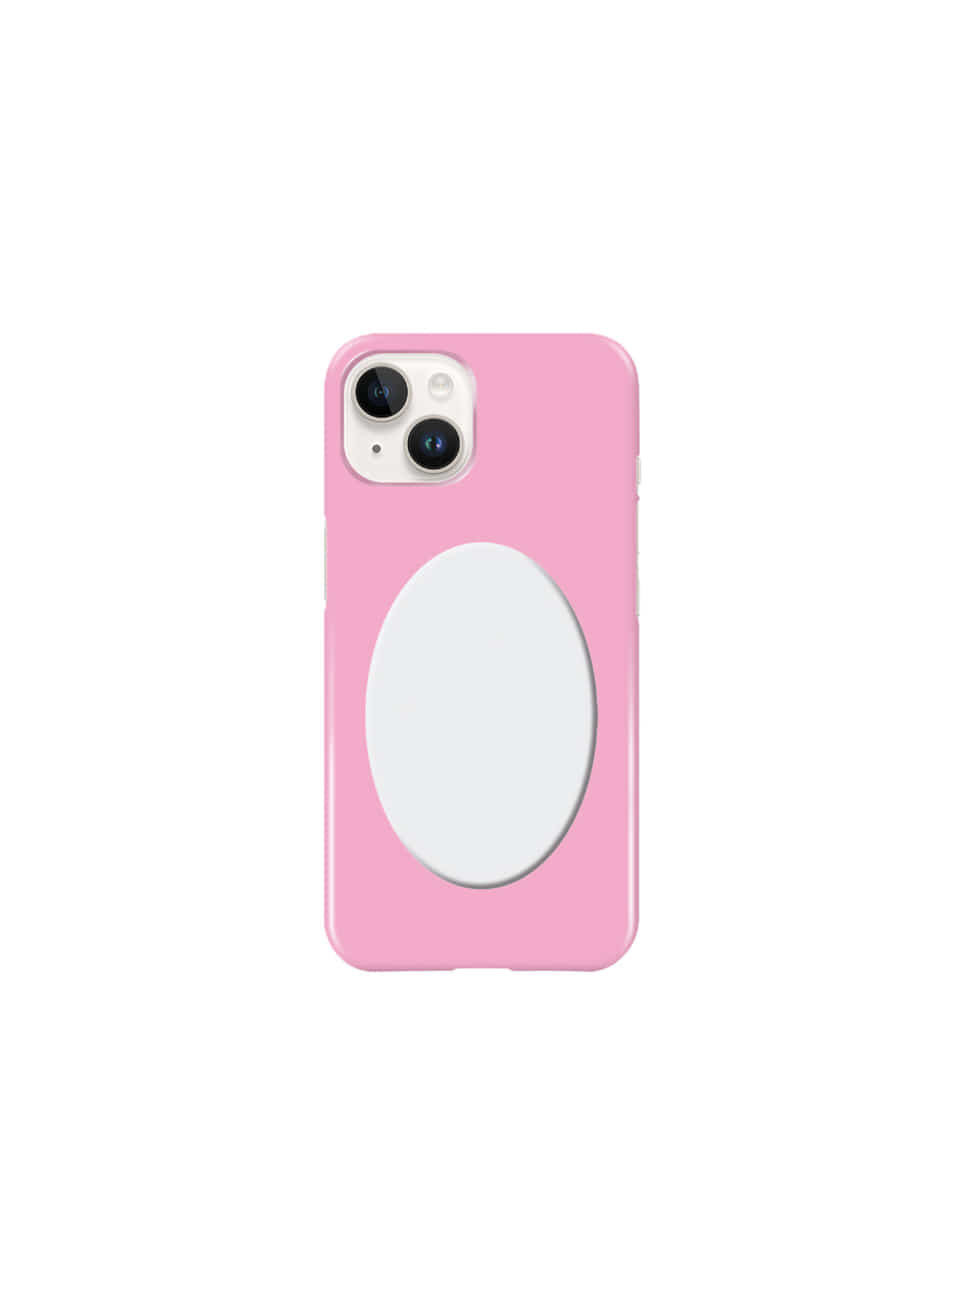 Reflector Iphone Hard Case Pink